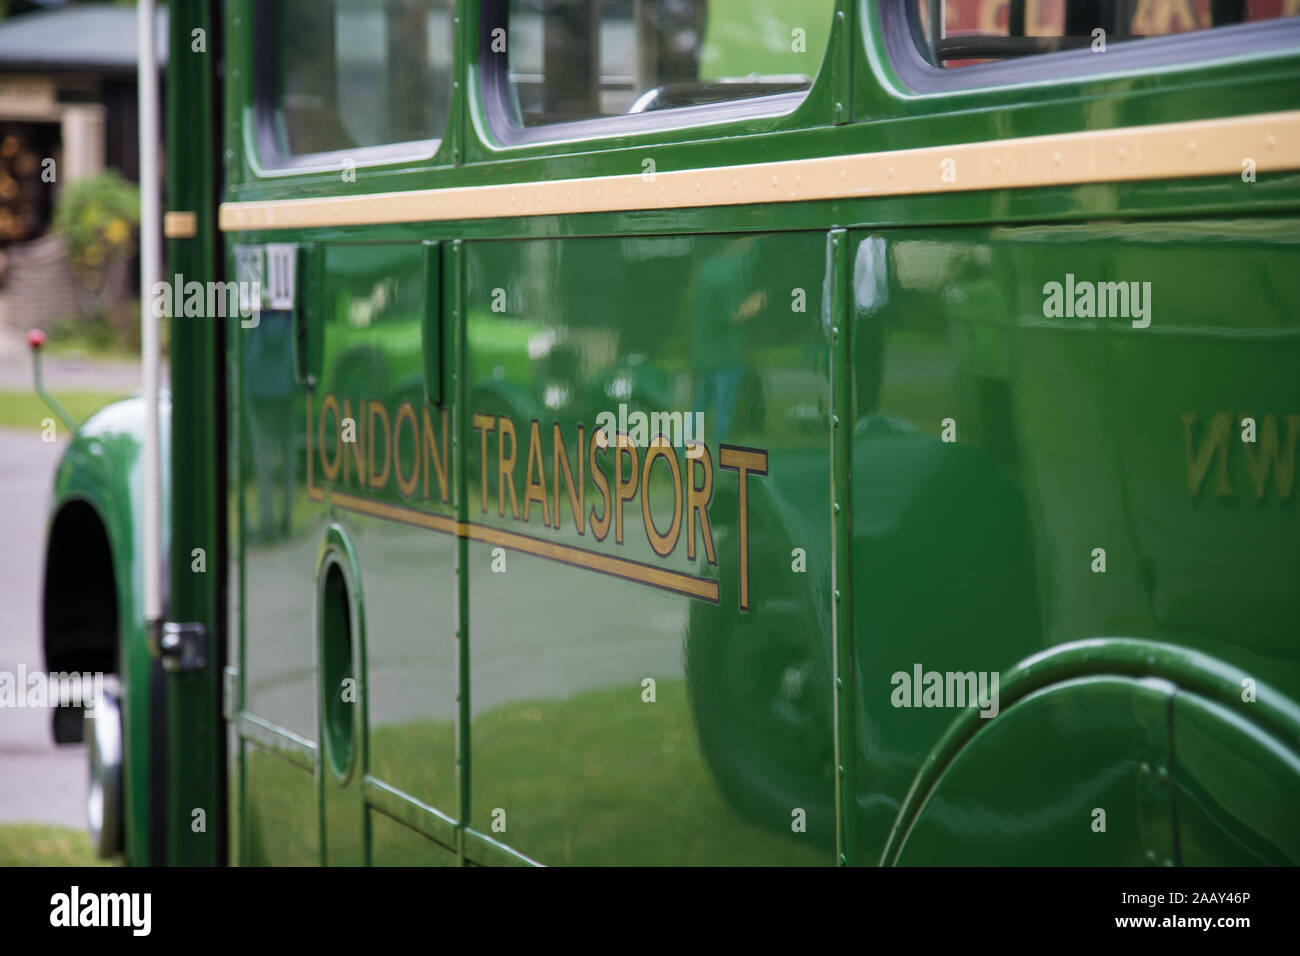 Amberley museo autobus vintage Foto Stock